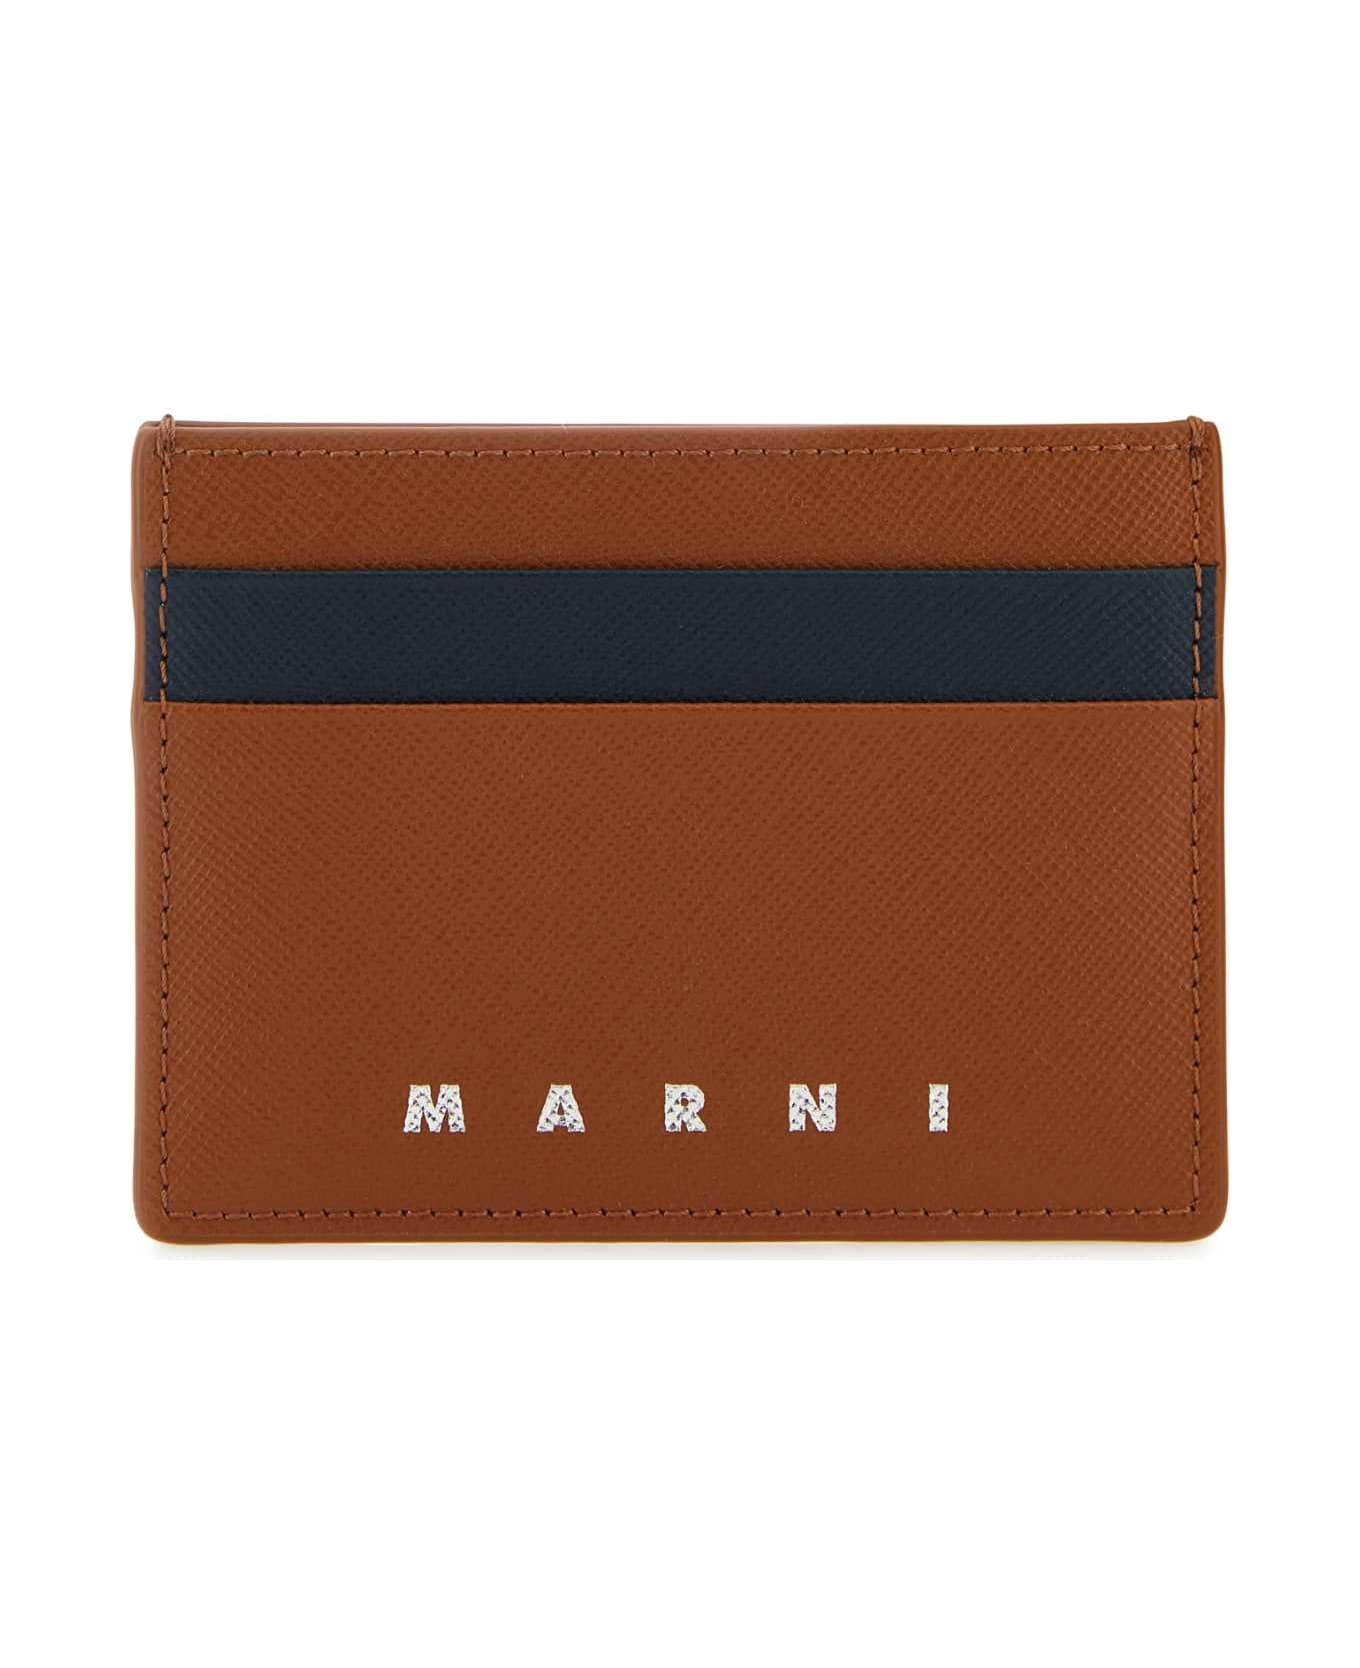 Marni Two-tone Leather Cardholder - MOCANIGHTBLUE